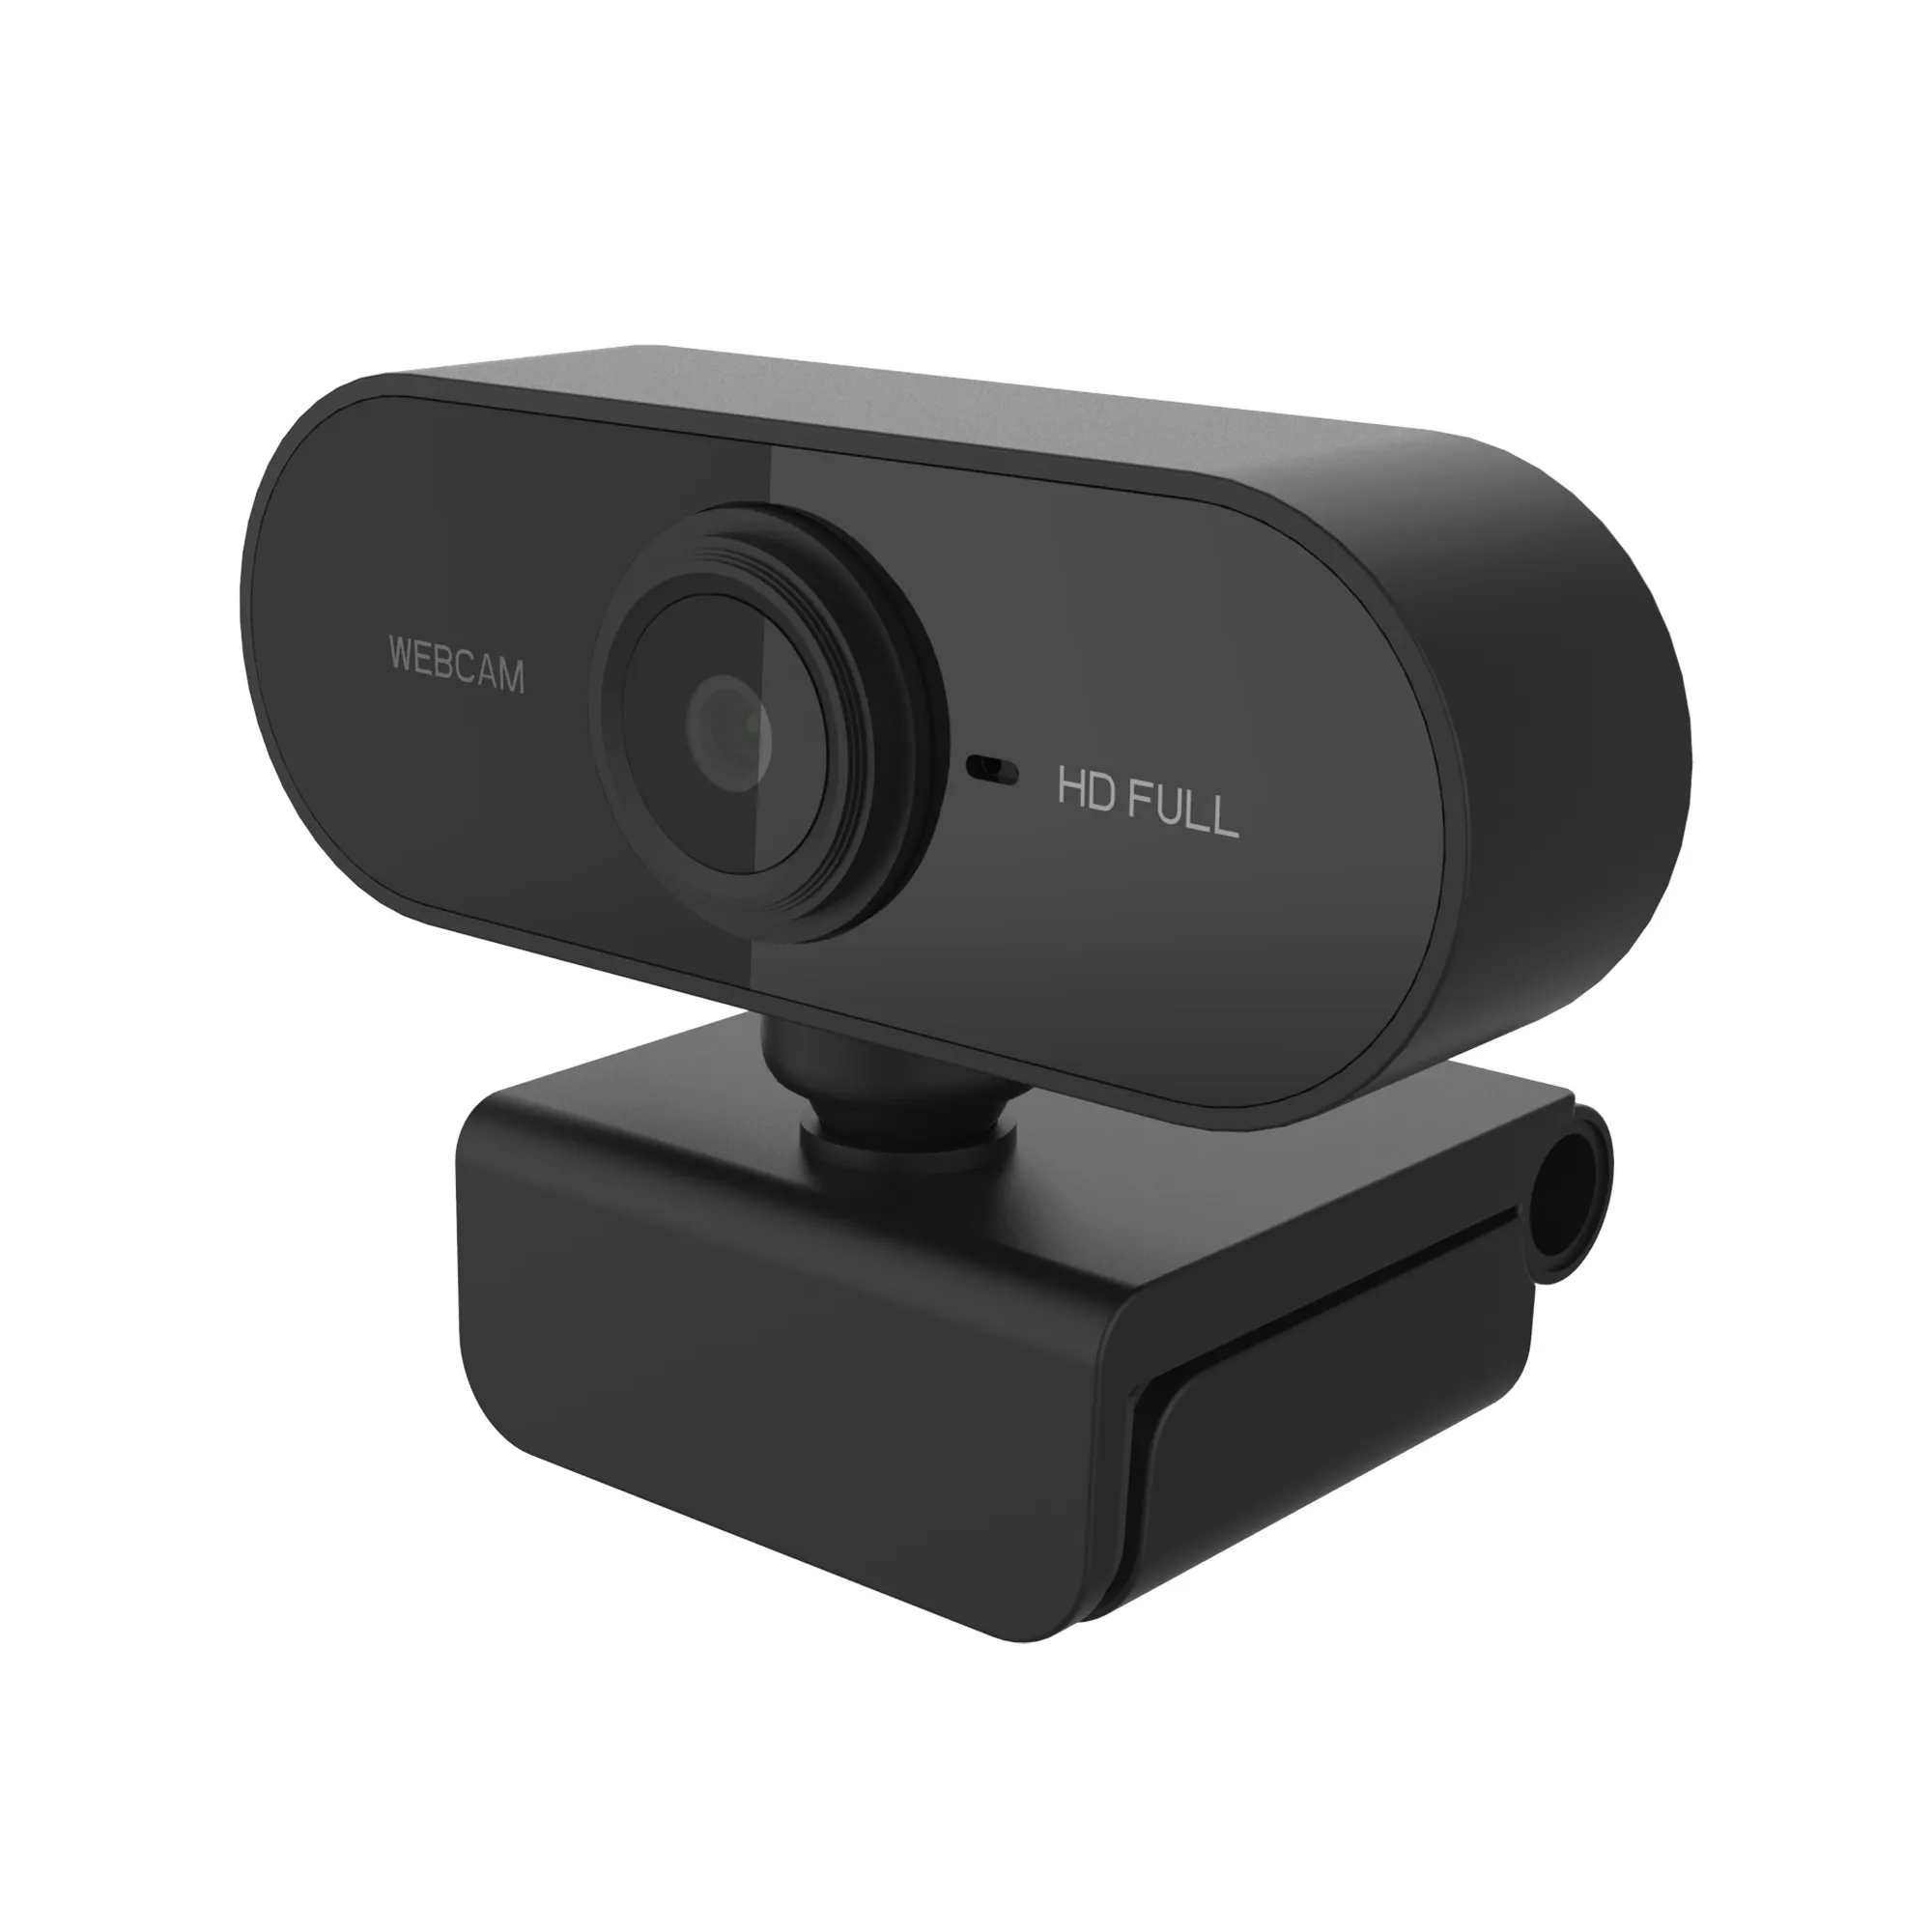 Auto focus built in mic full hd 1080p webcam camera for pc webcam computer